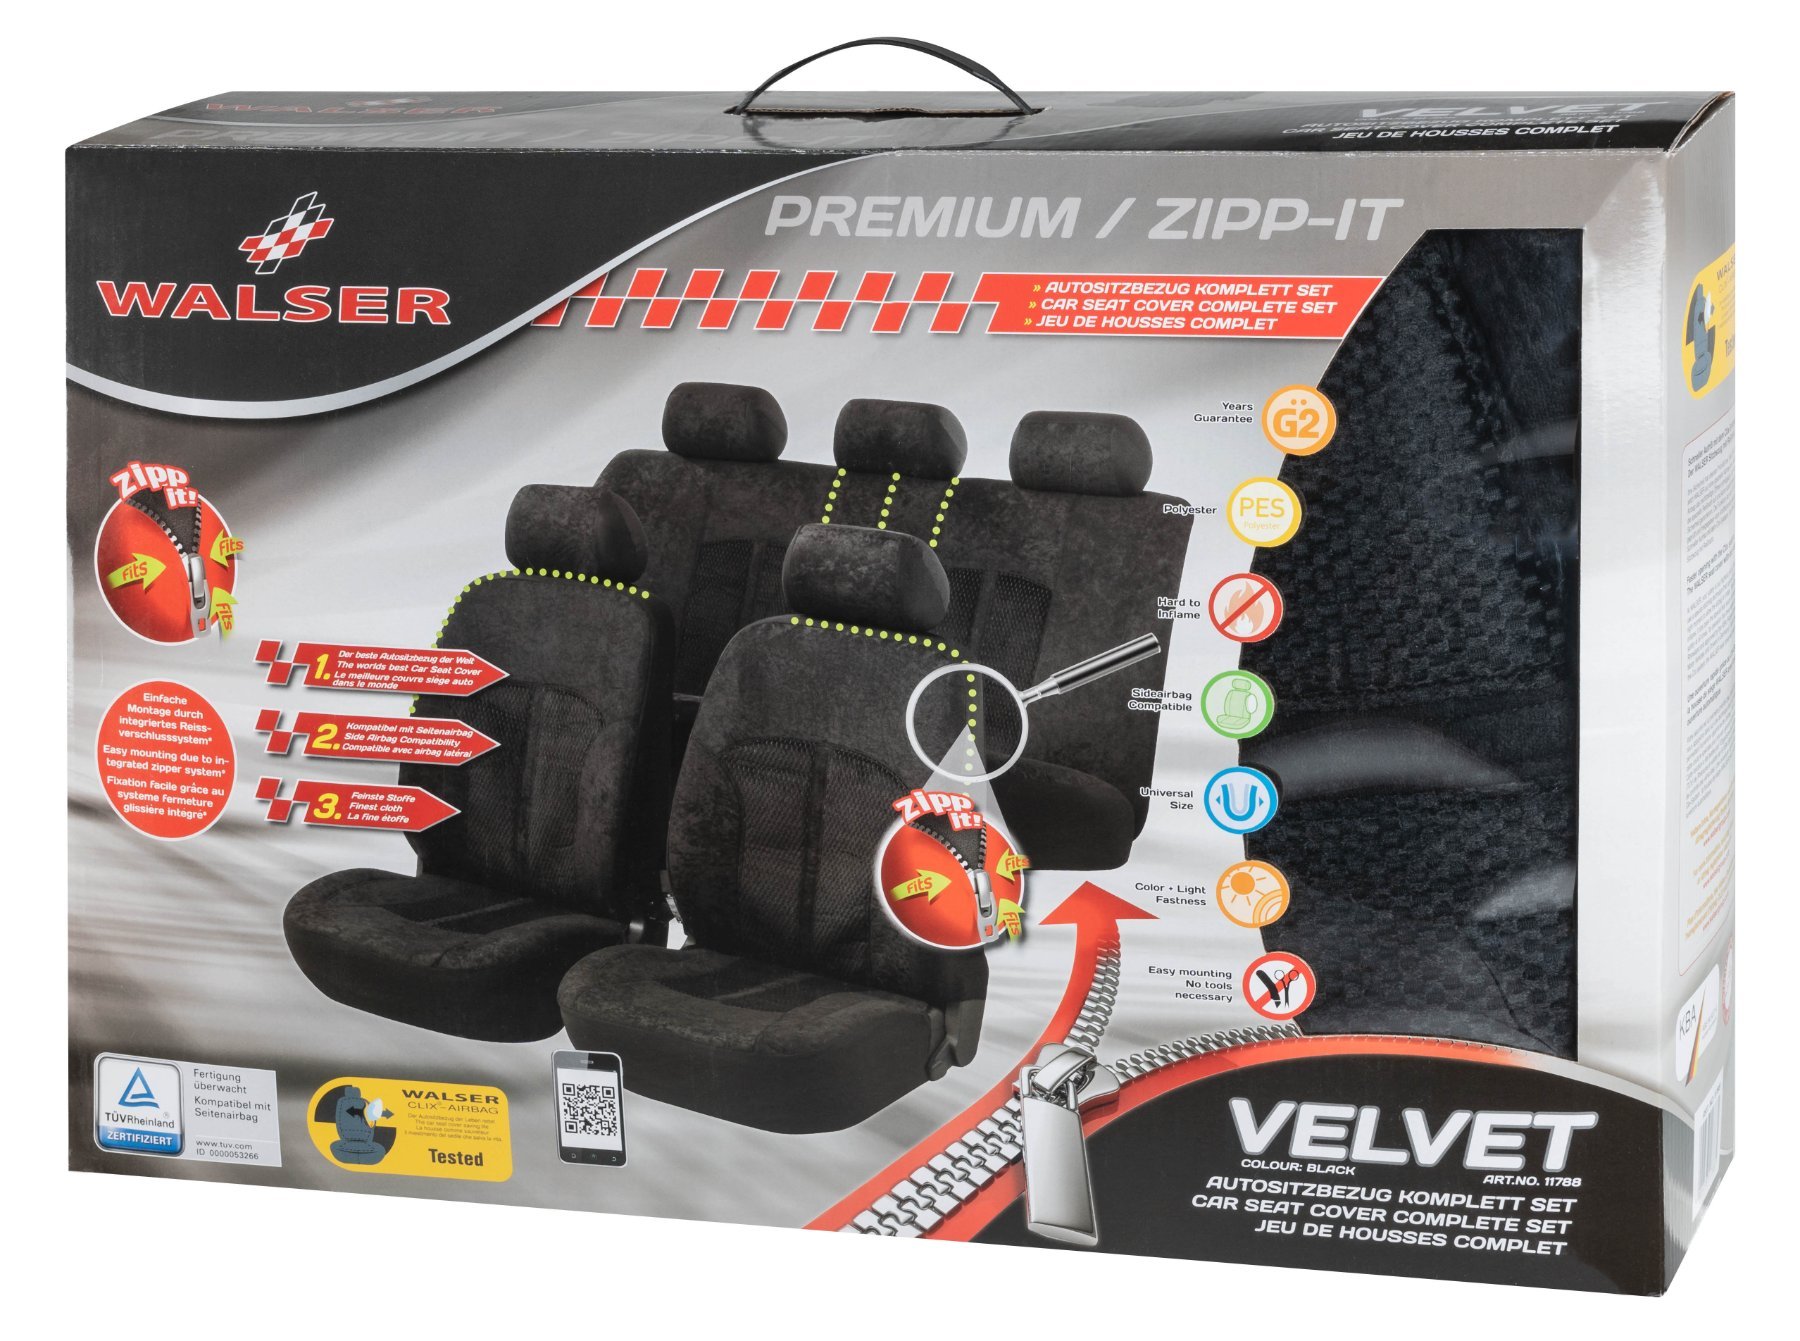 ZIPP IT Premium Velvet car Seat covers with zipper system